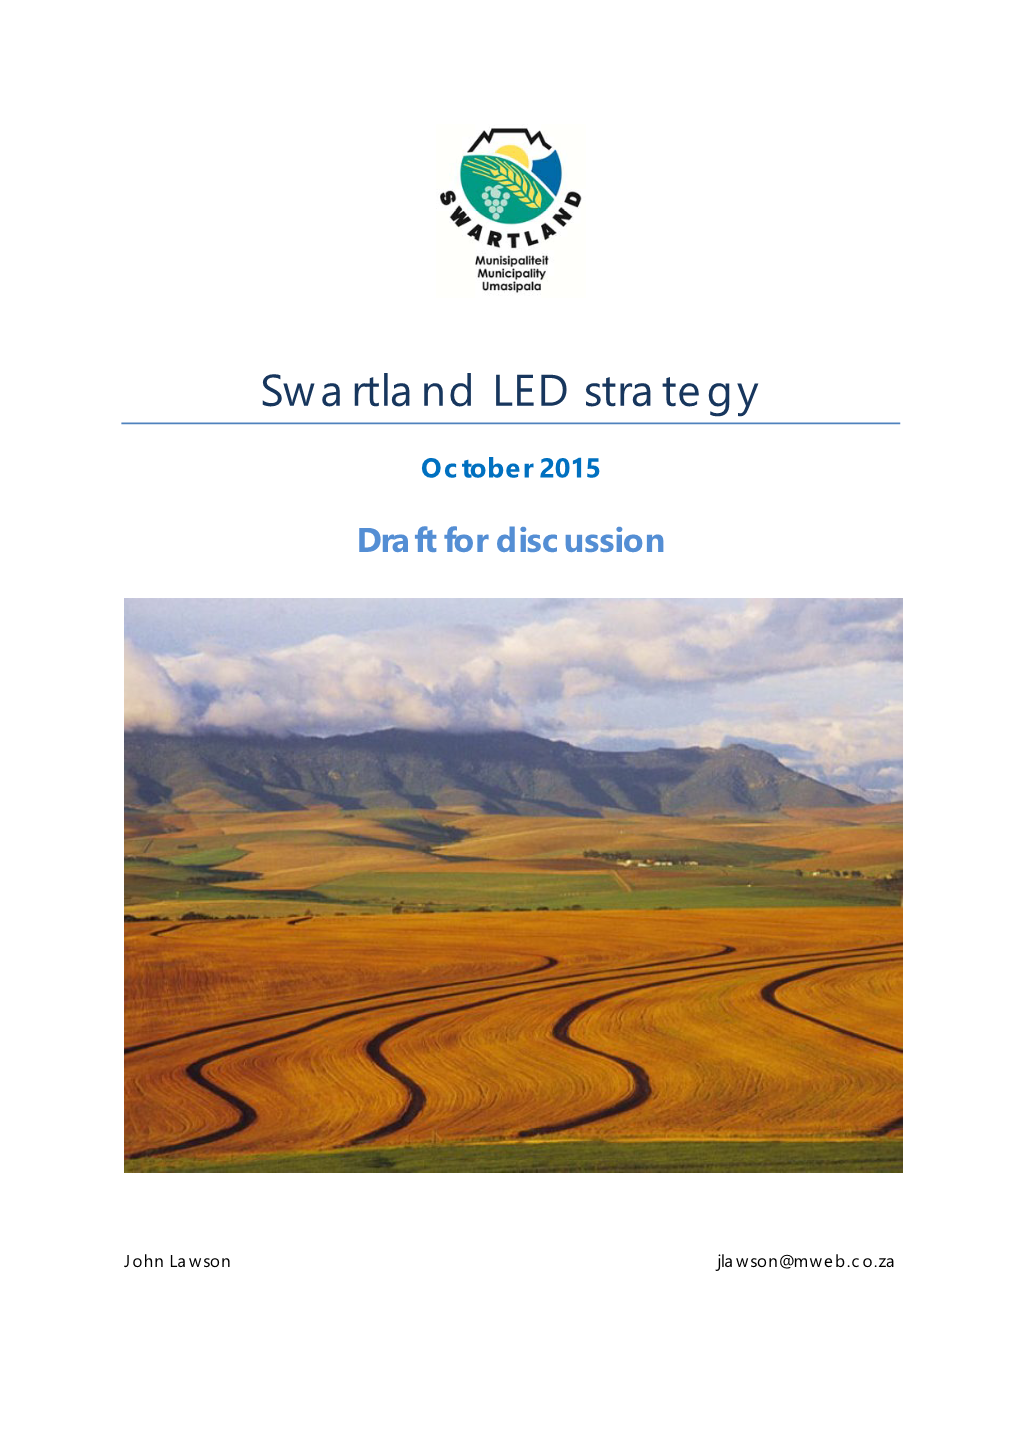 Swartland LED Strategy